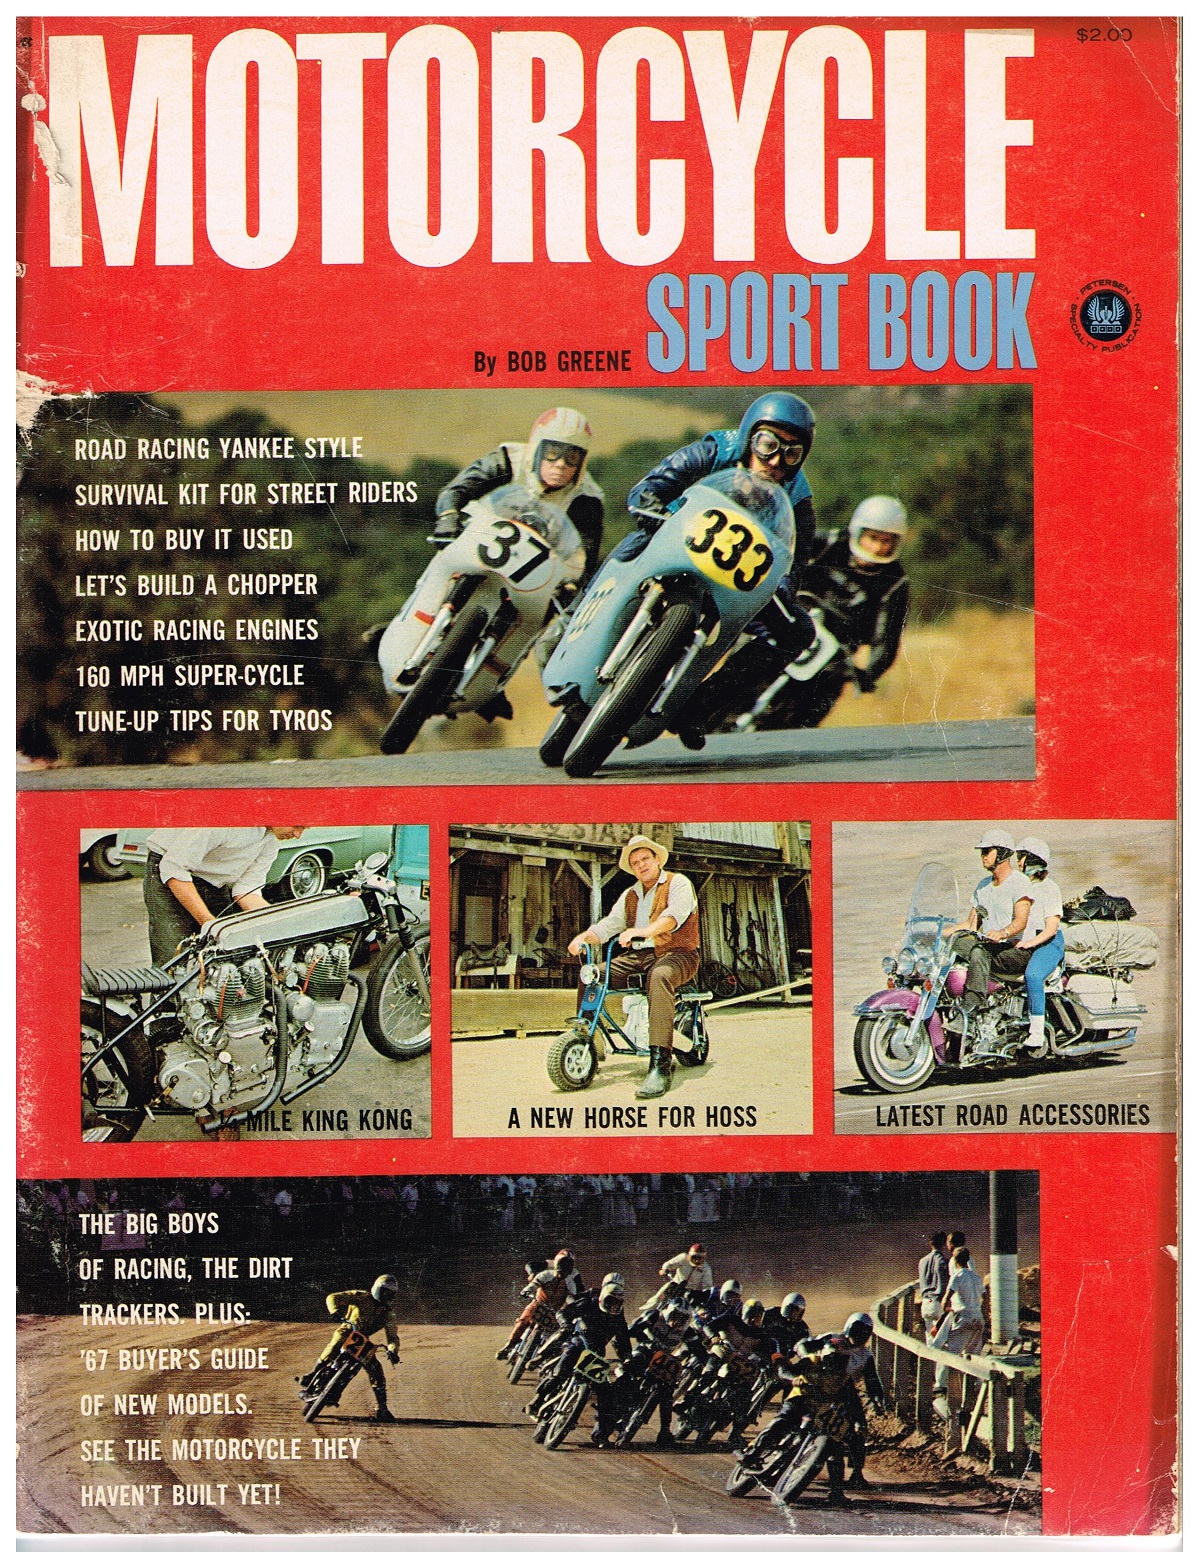 Motorcycle Sport Book Cover1200.jpg